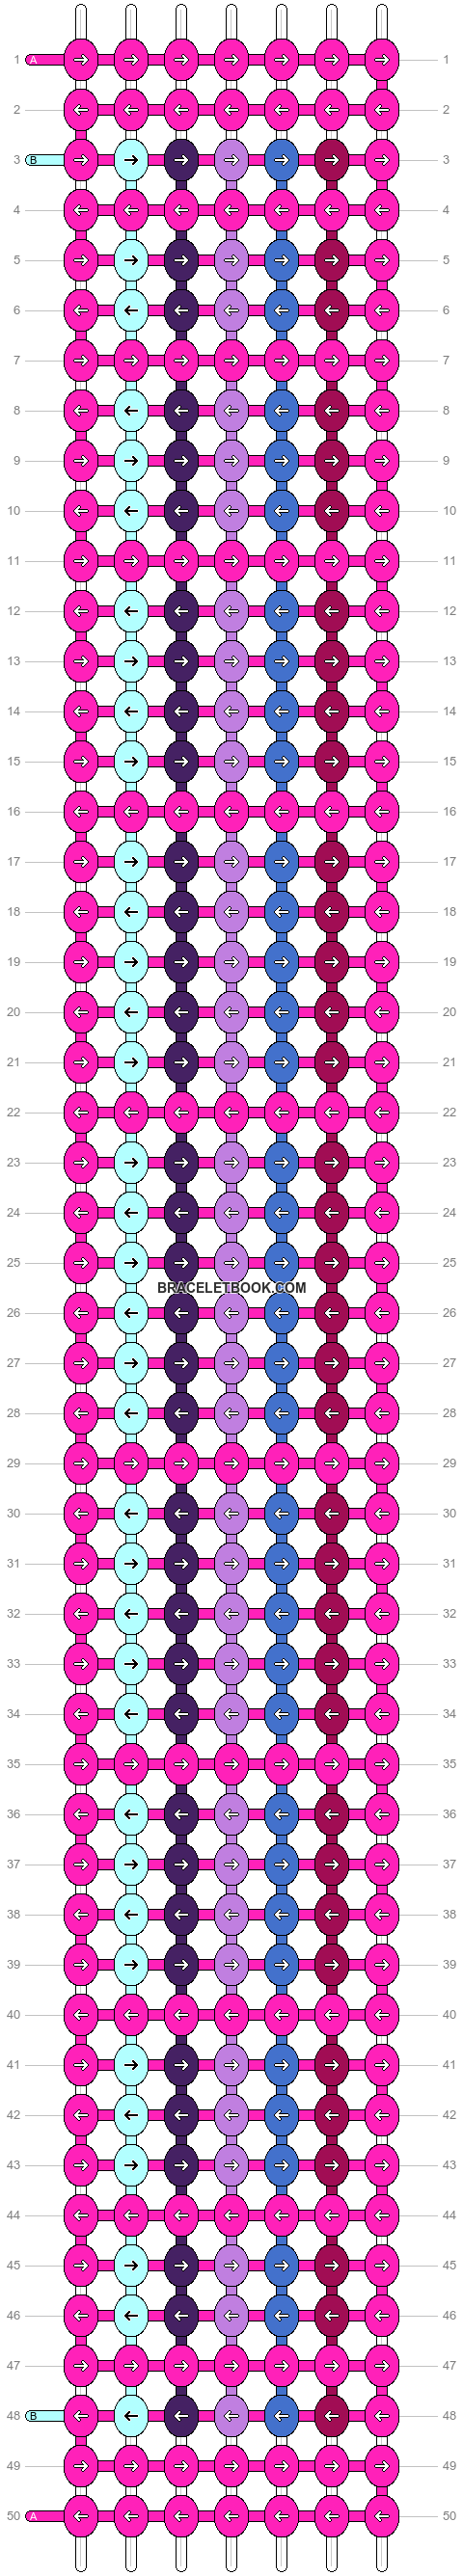 Alpha pattern #59061 variation #104701 pattern